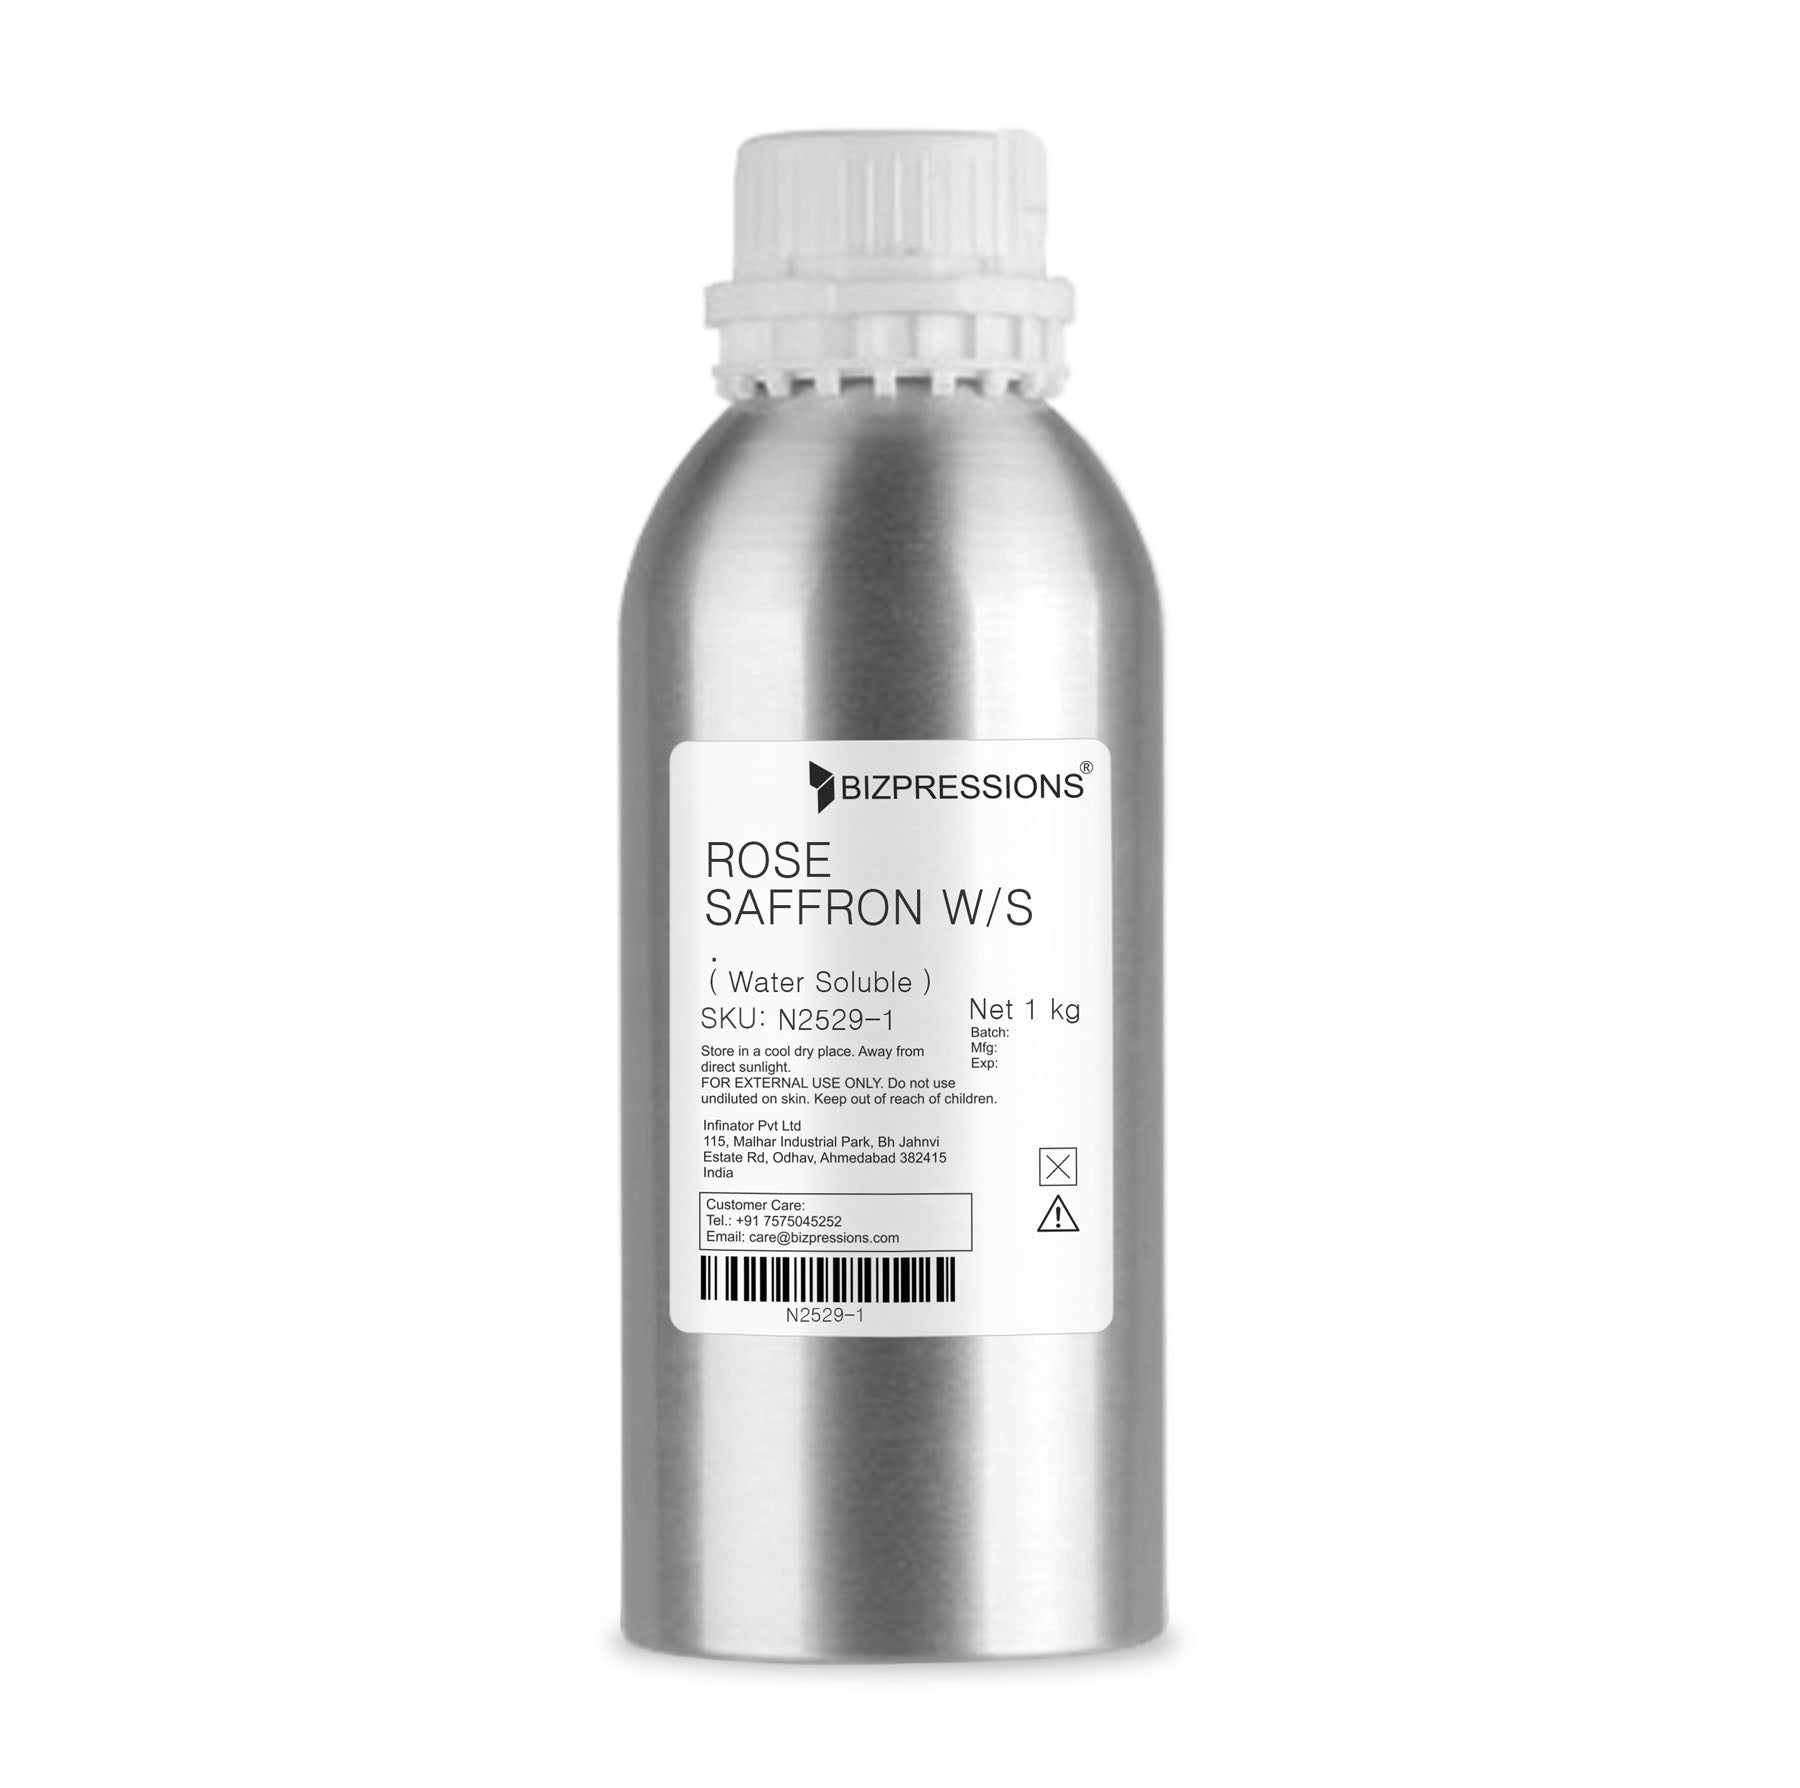 ROSE SAFFRON W/S - Fragrance ( Water Soluble ) - 1 kg